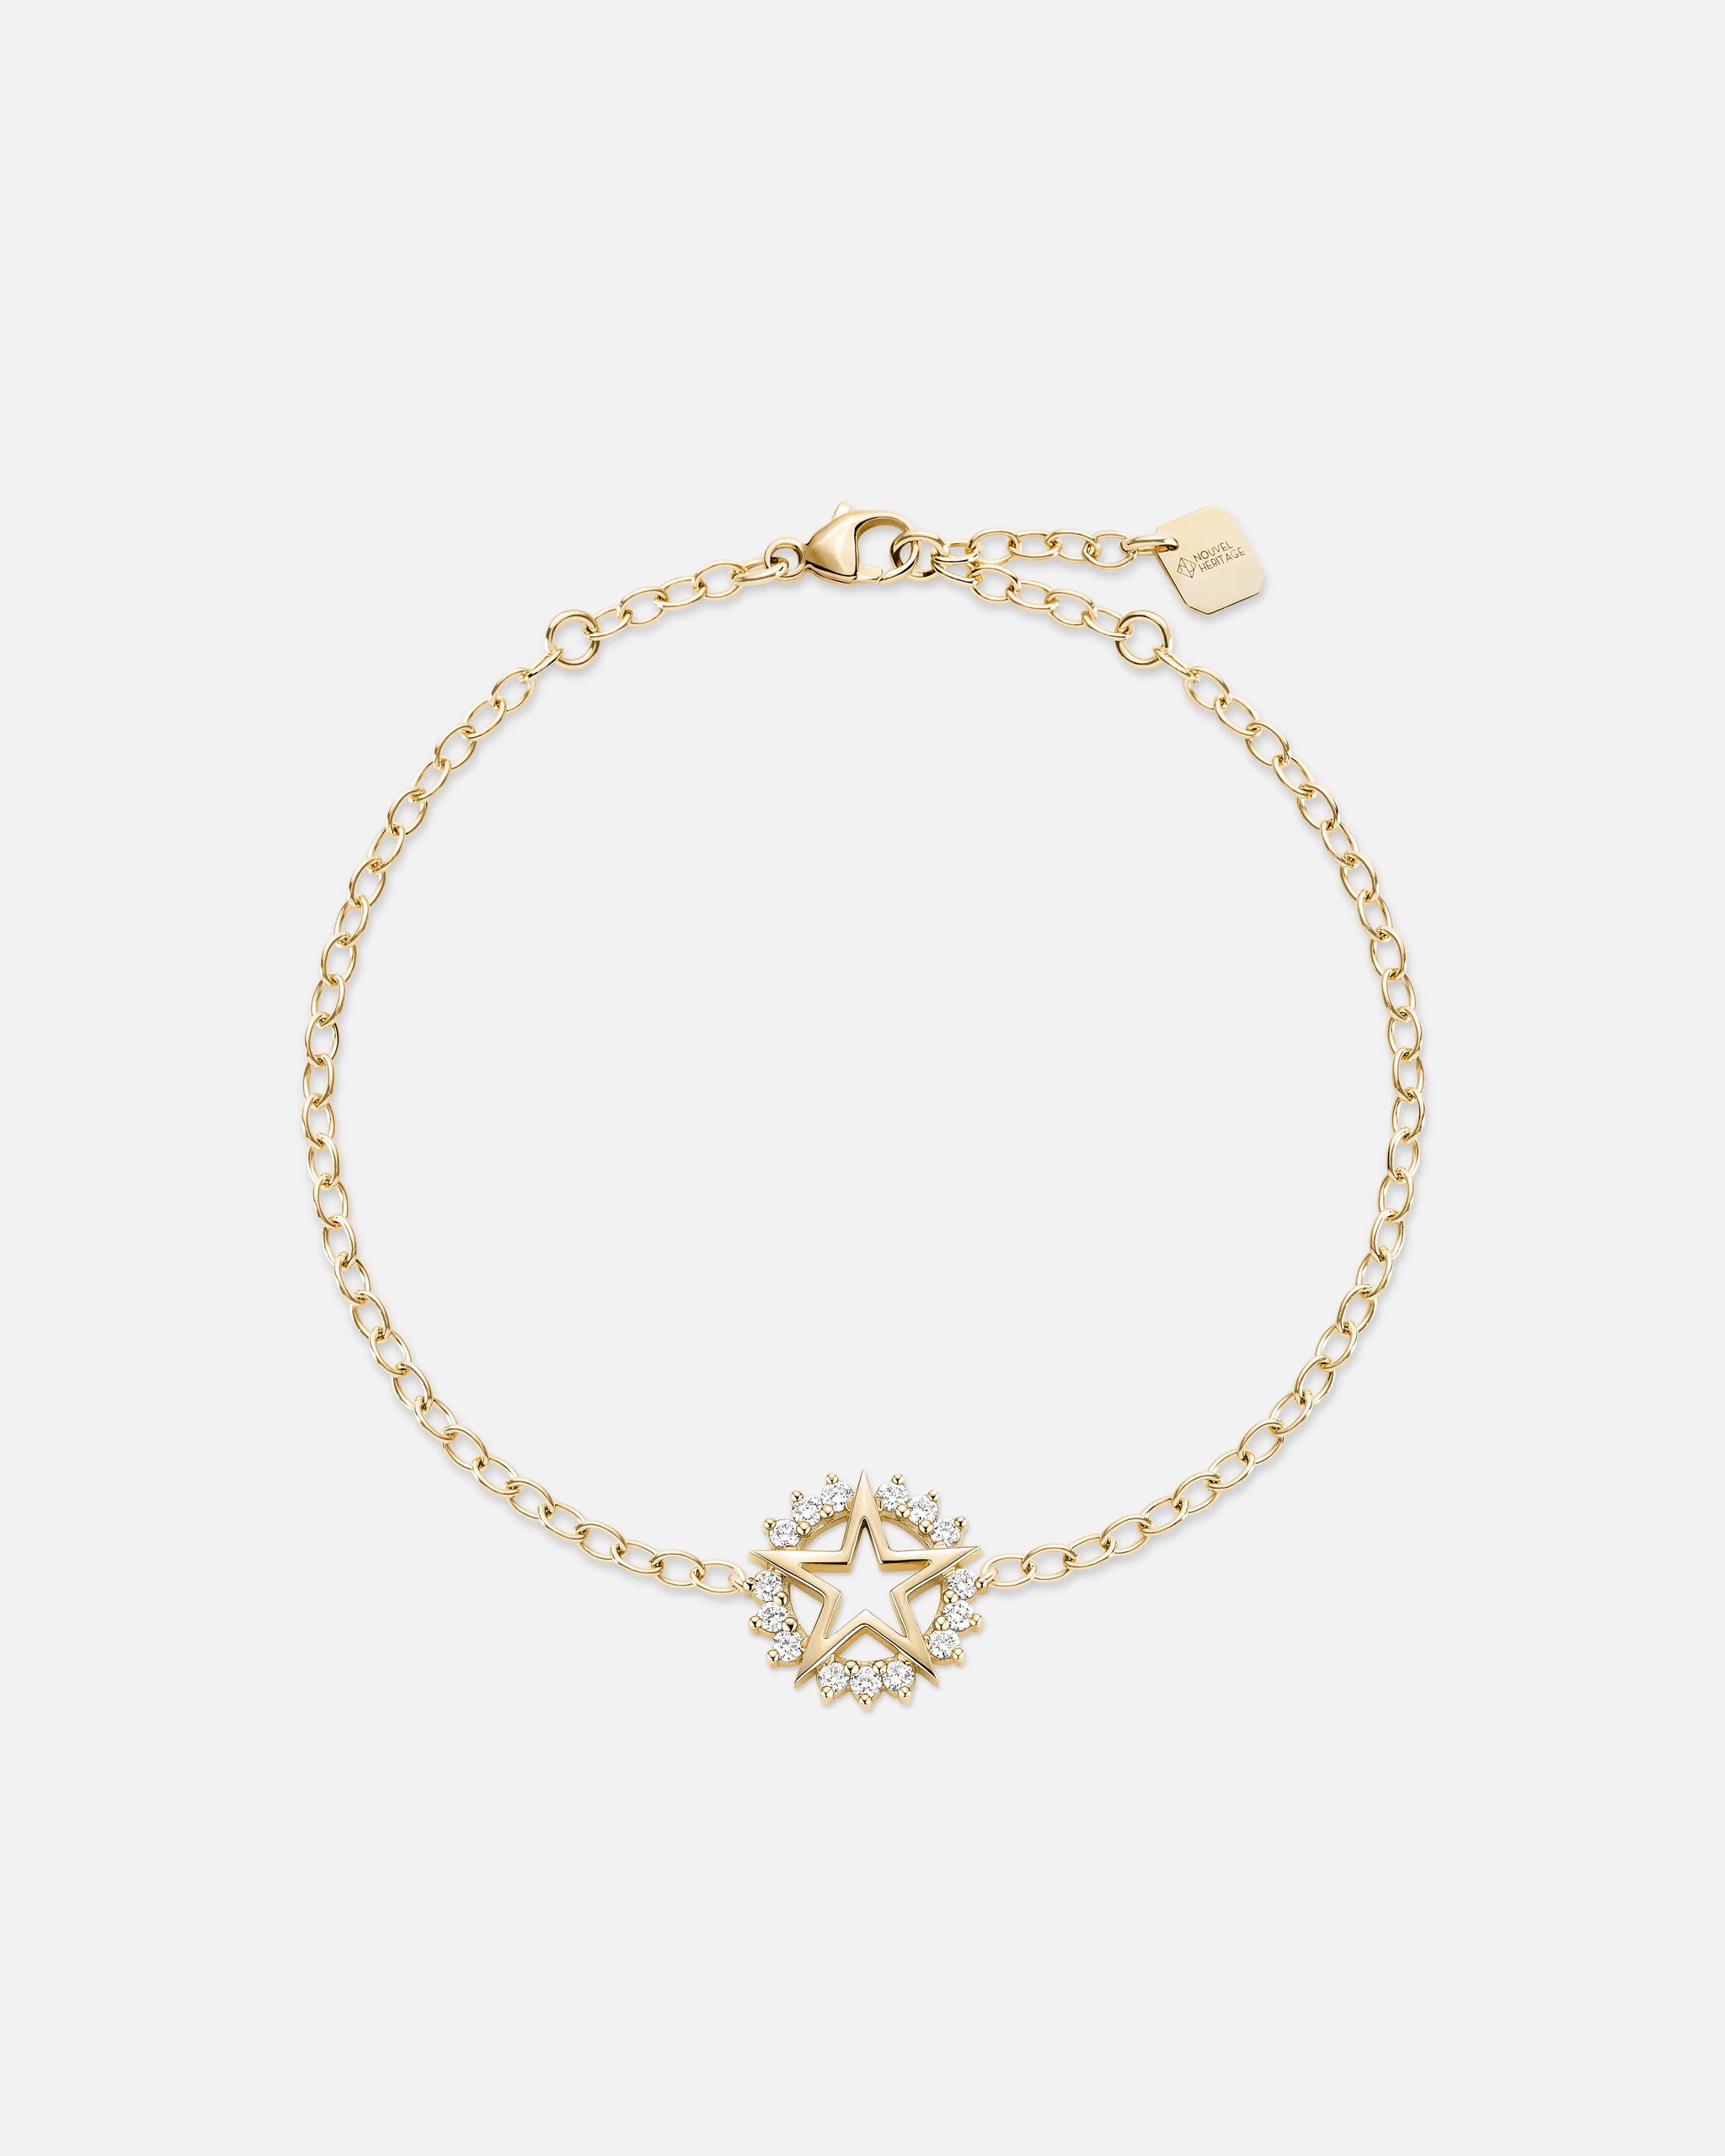 Medium Star Bracelet in Yellow Gold - 1 - Nouvel Heritage